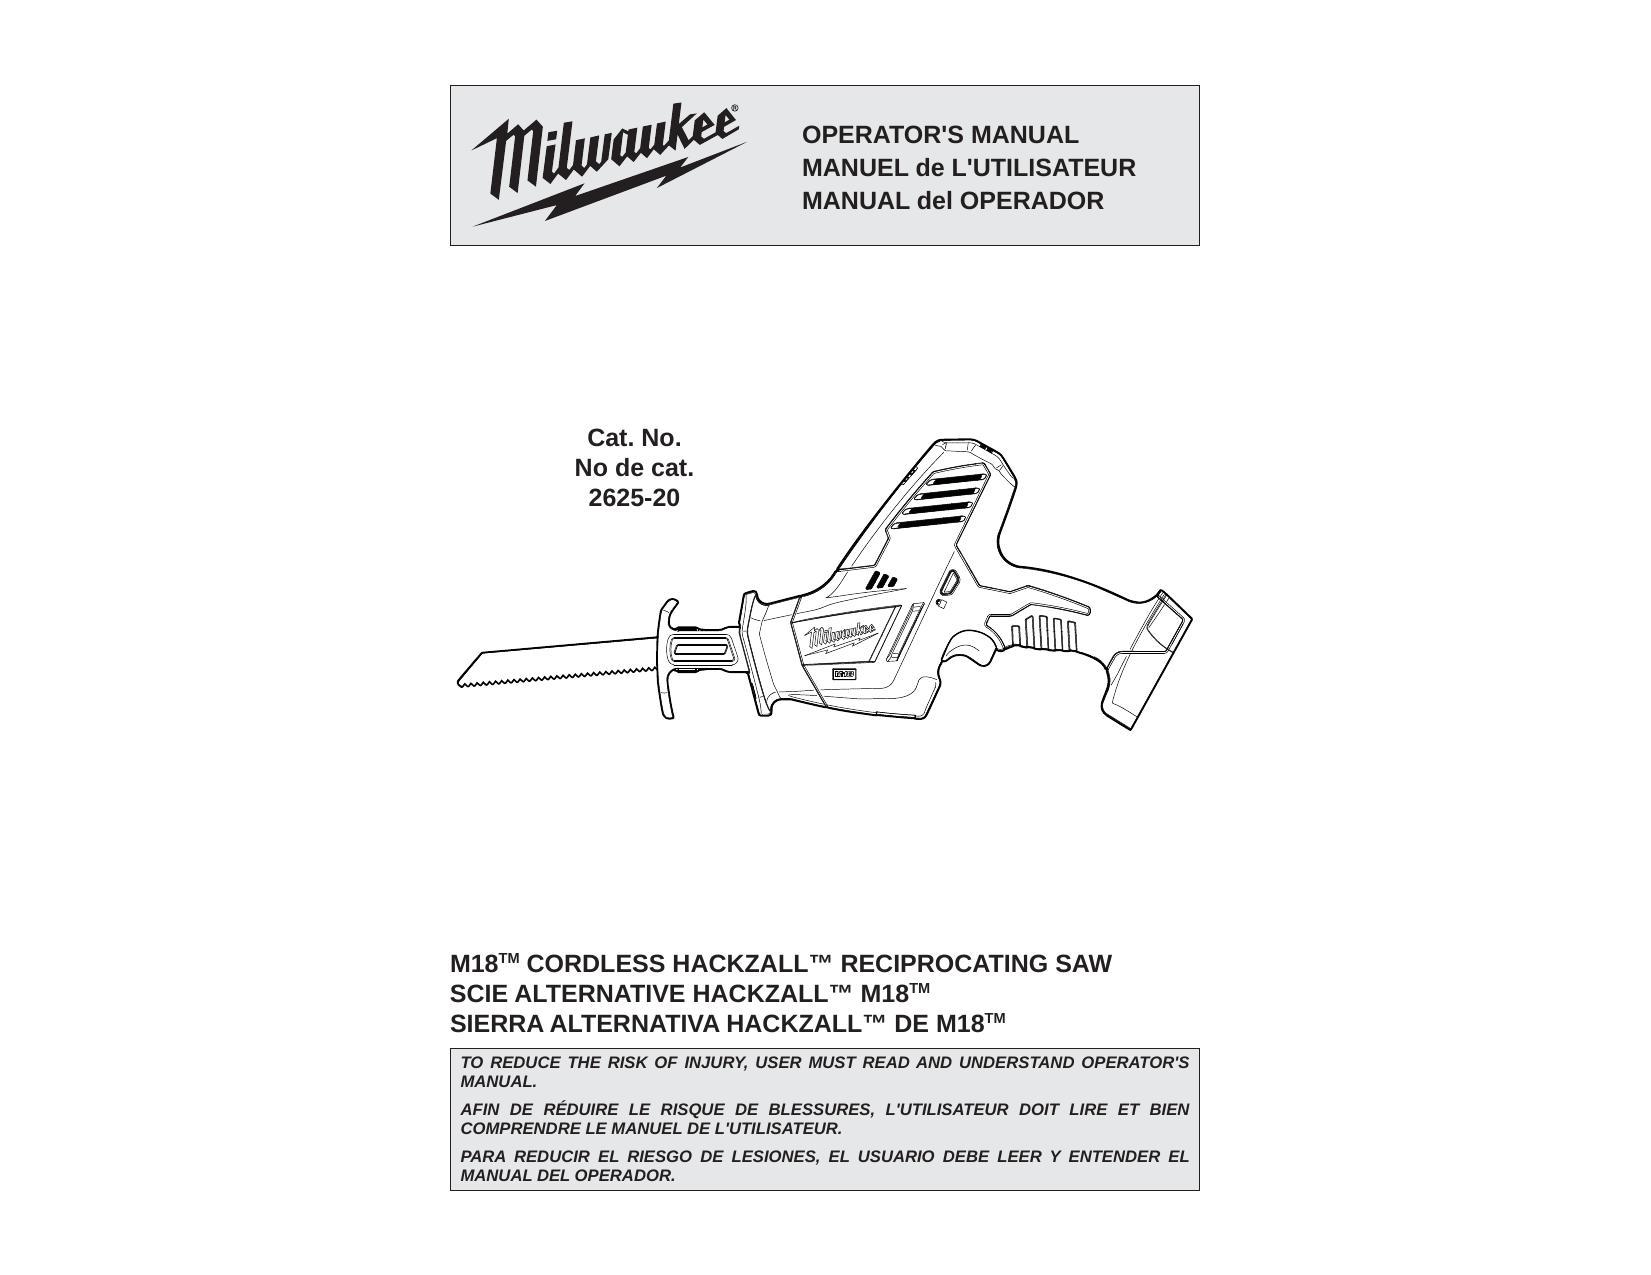 m18tm-cordless-hackzall-tm-reciprocating-saw-operators-manual.pdf